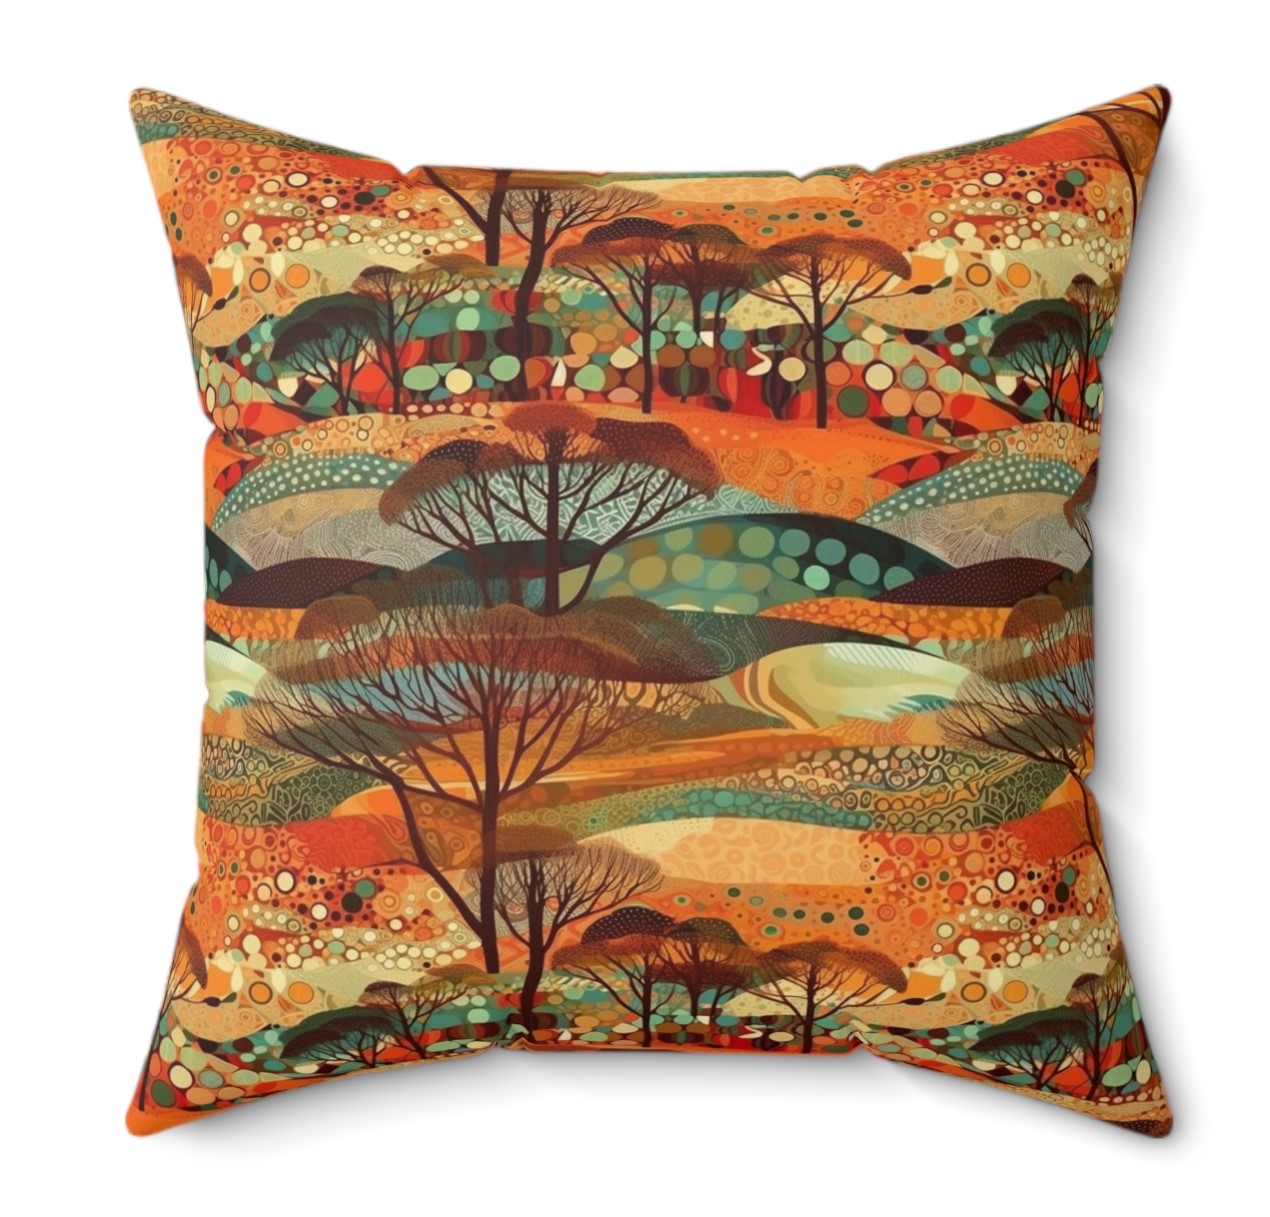 Savannah Dreams Vibrant Ugandan Landscape Pillow